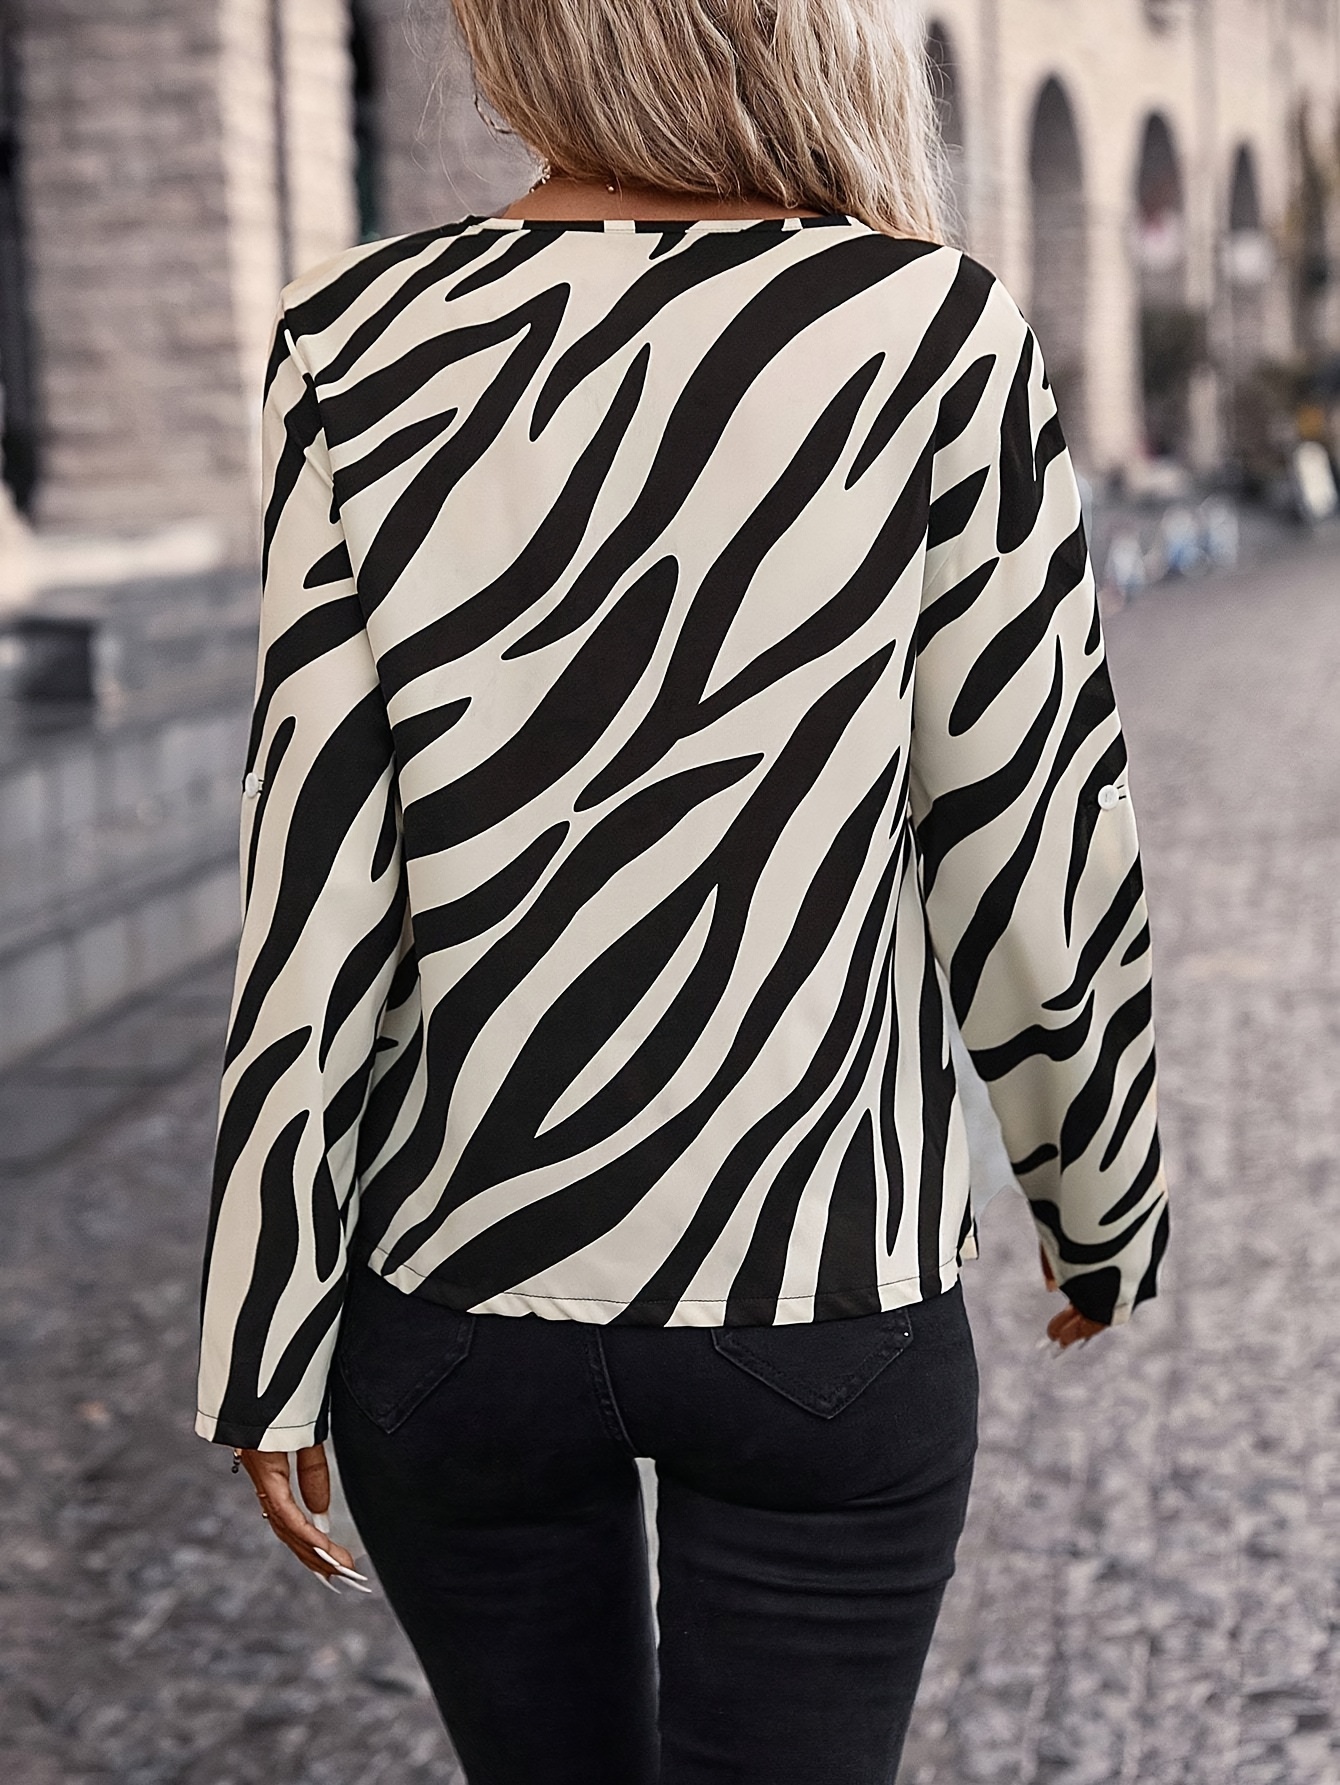 Zebra Stripe Print Zipper Front Shirt, Casual V Neck Long Sleeve Shirt For  Spring & Fall, Women's Clothing